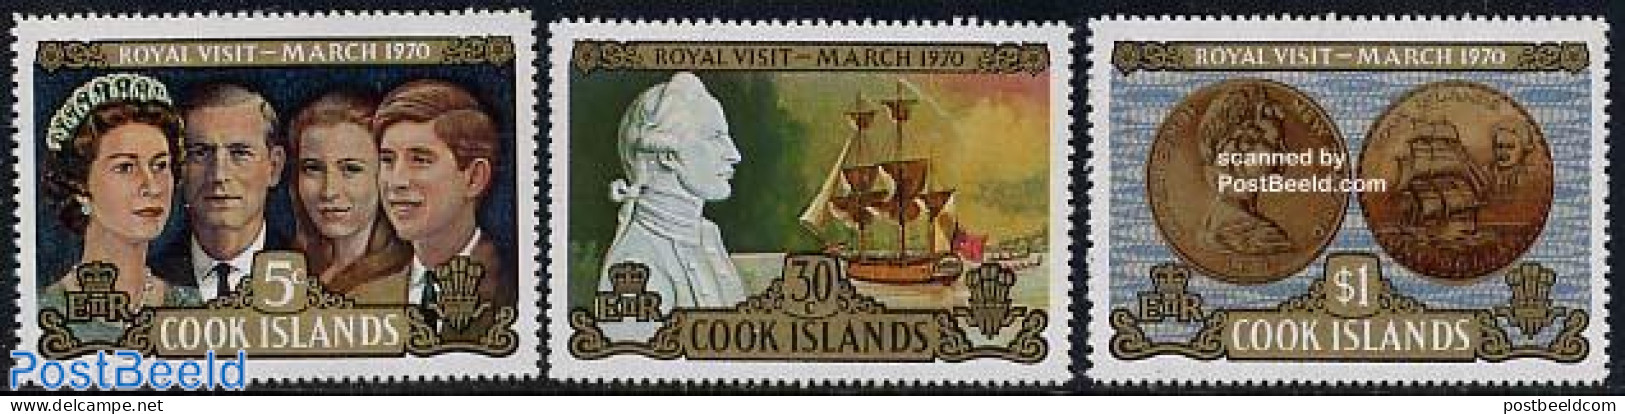 Cook Islands 1970 Royal Visit 3v, Mint NH, History - Transport - Various - Explorers - Kings & Queens (Royalty) - Ship.. - Onderzoekers